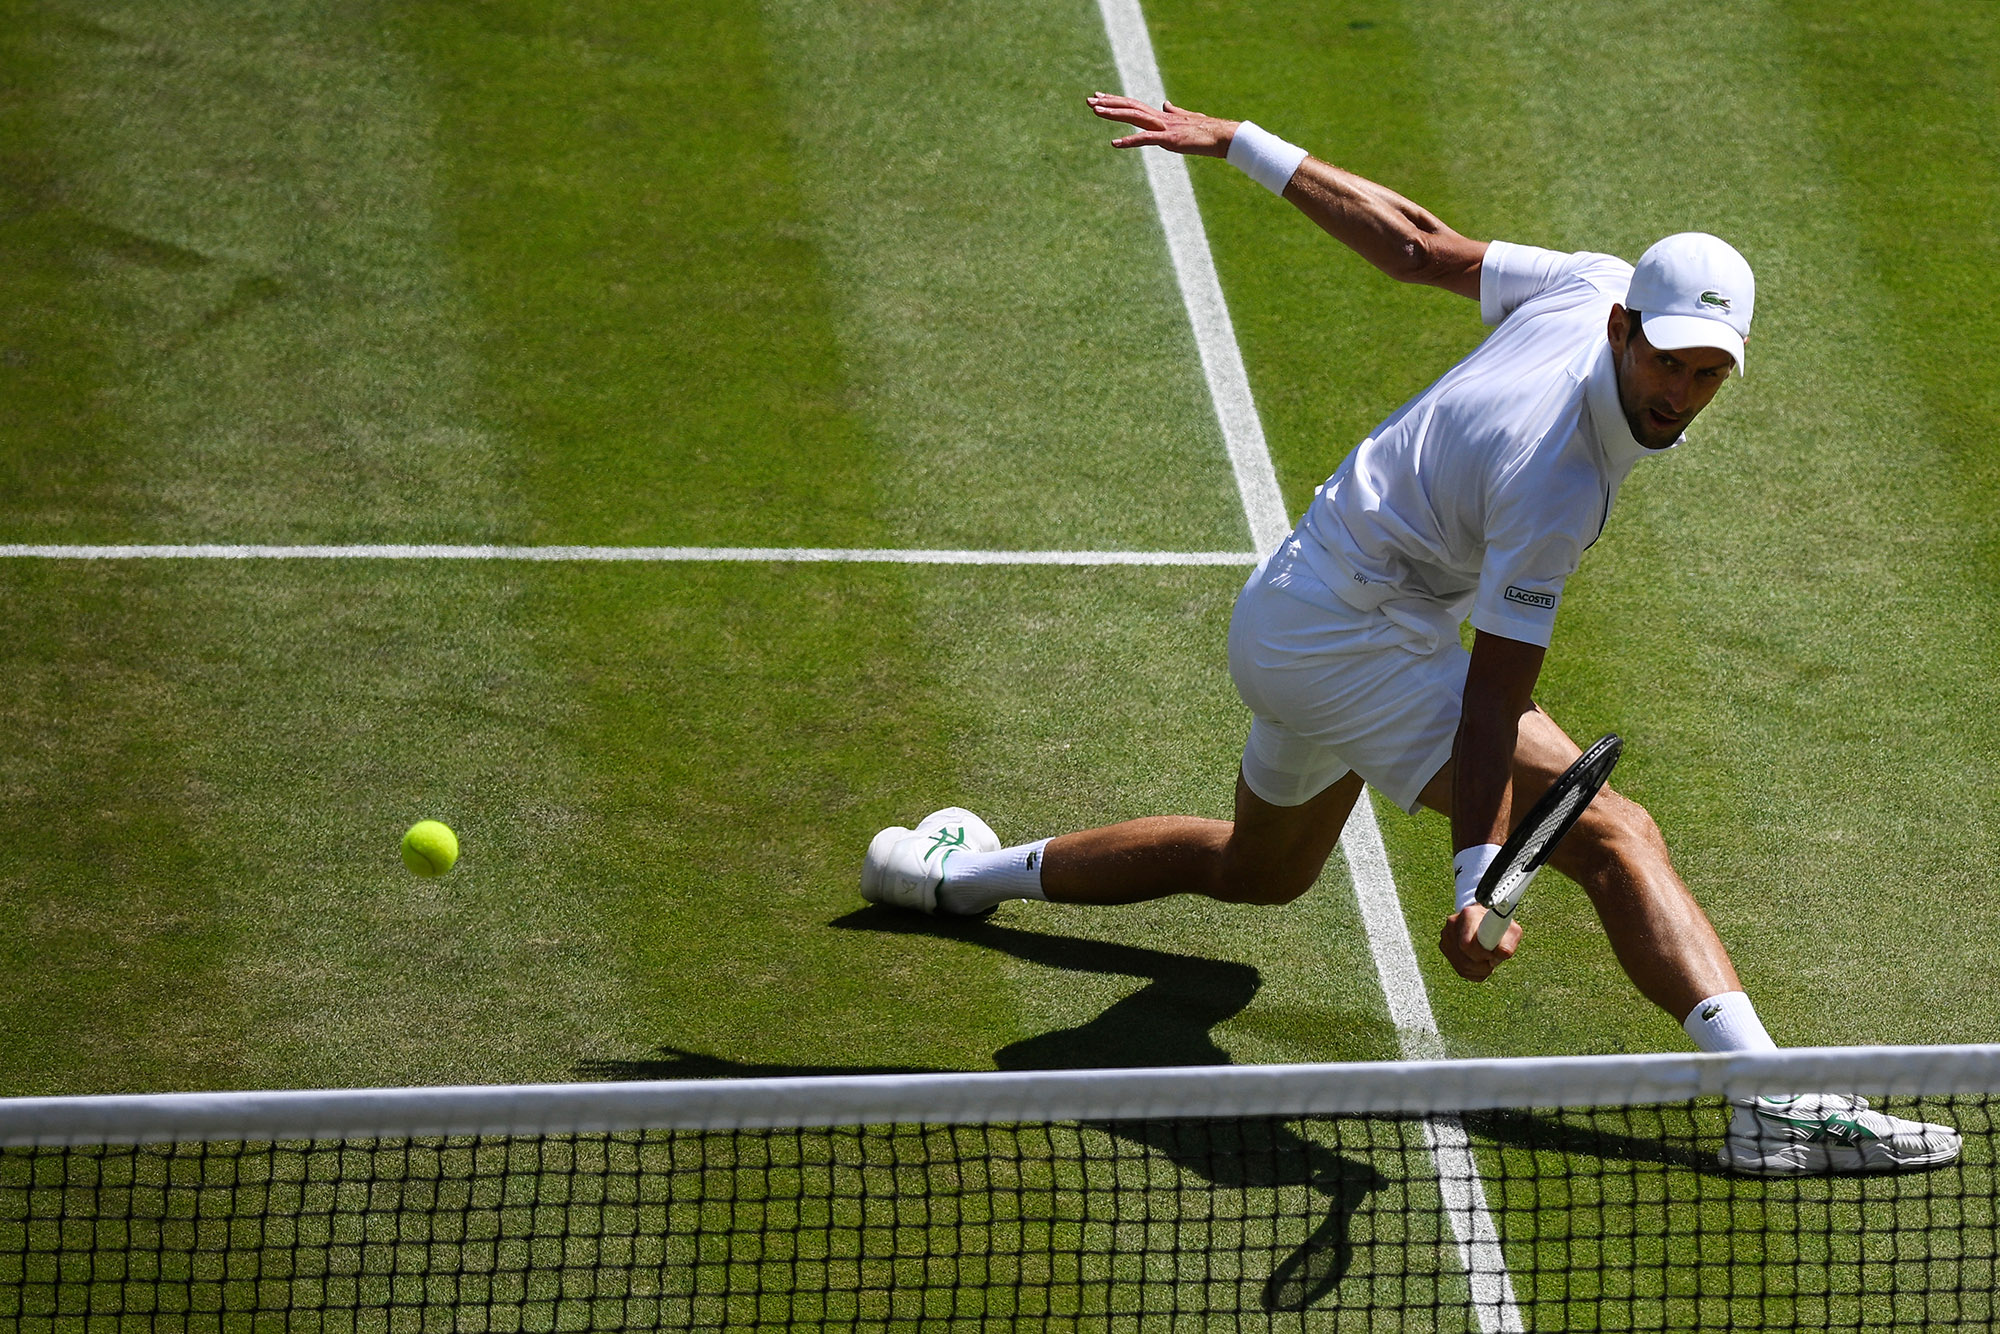 Wimbledon records longest tie-break in tennis: 38 points